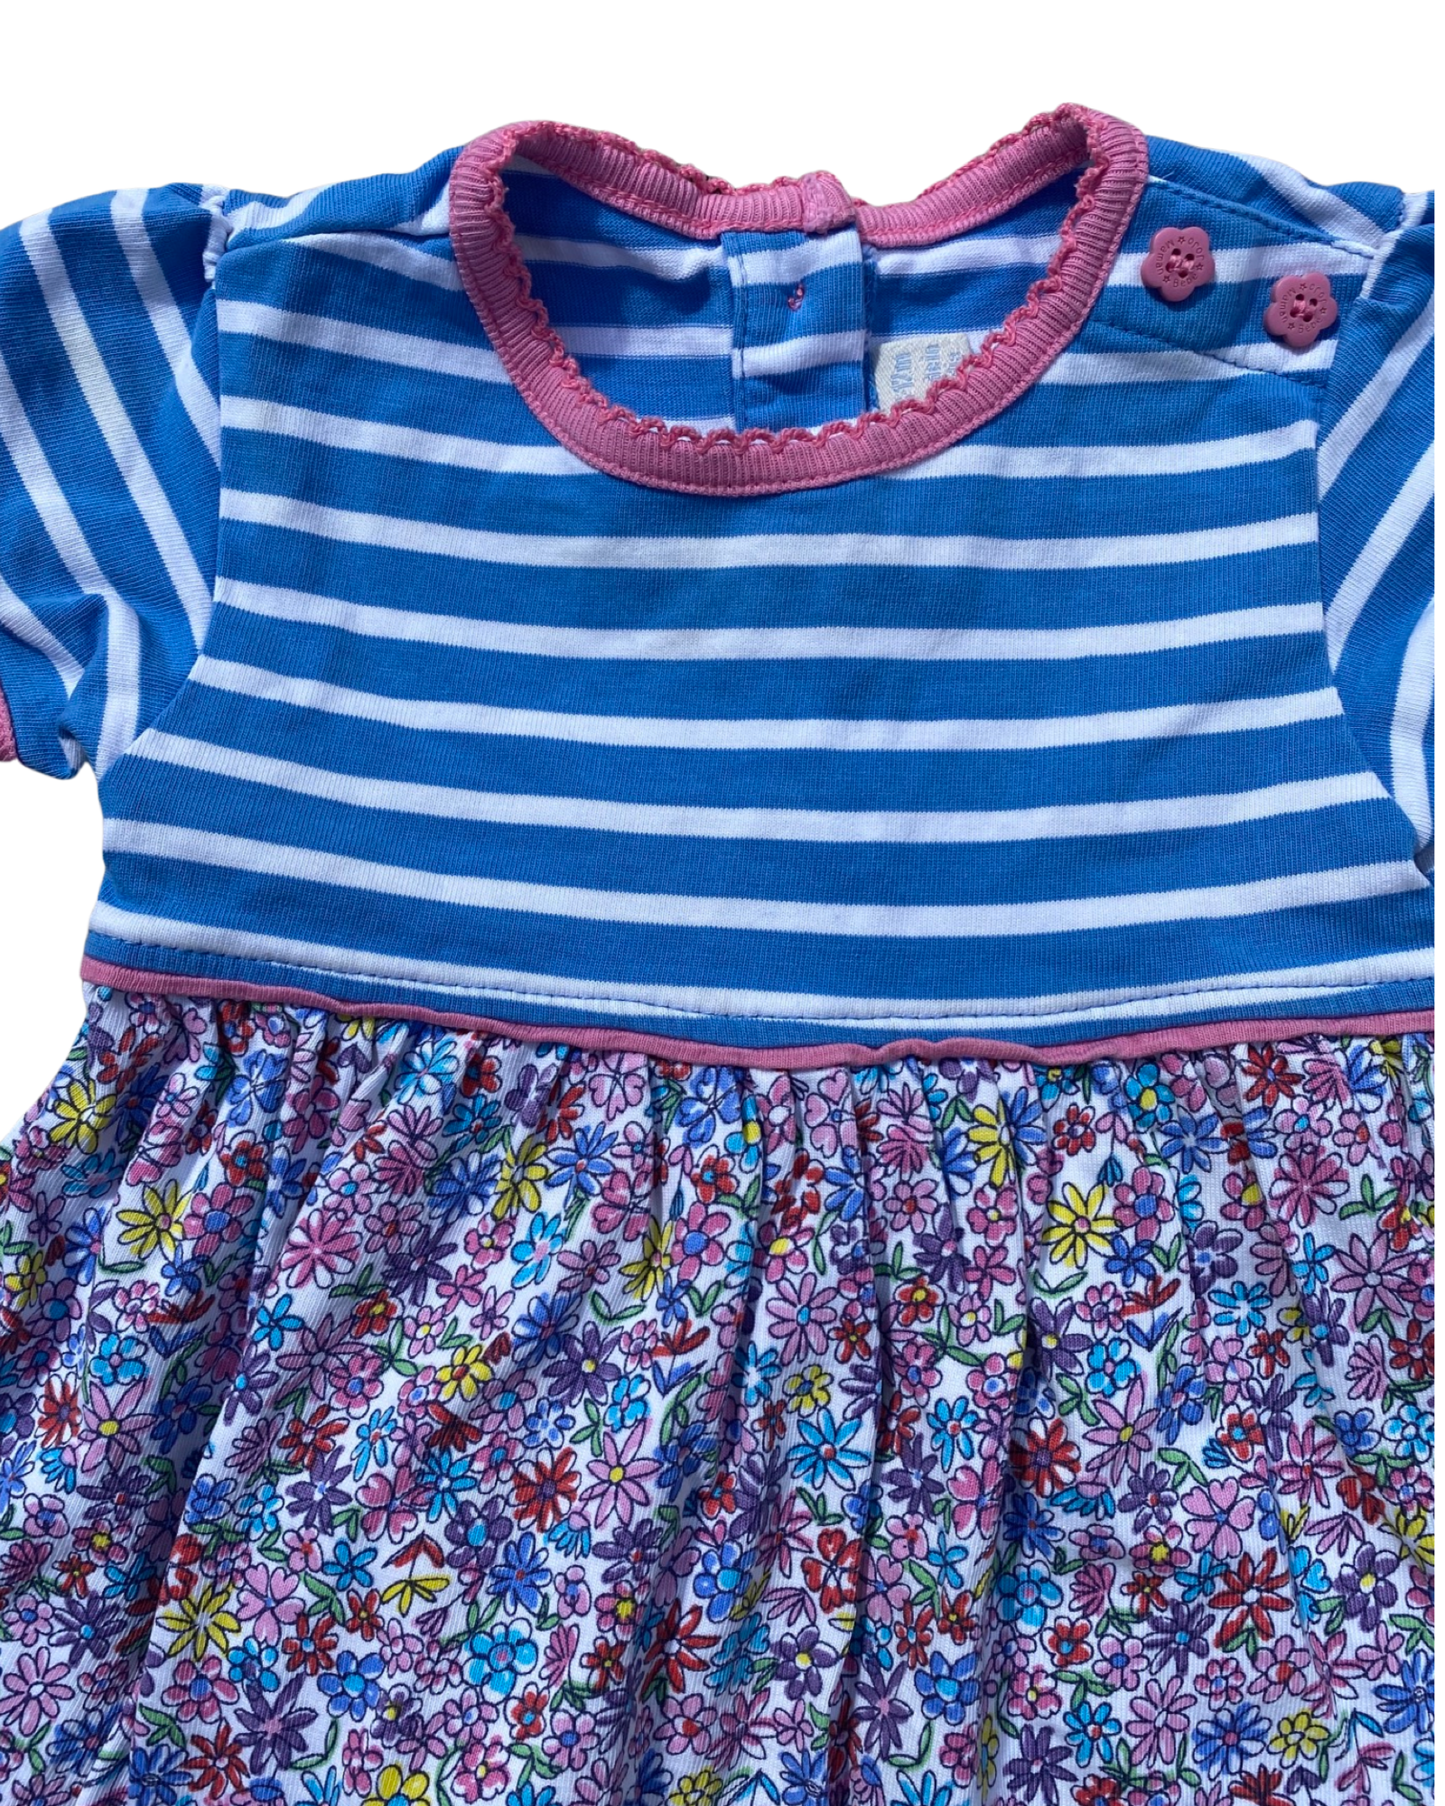 Jojo Maman Bebe striped/ditsy floral summer dress (6-12mths)